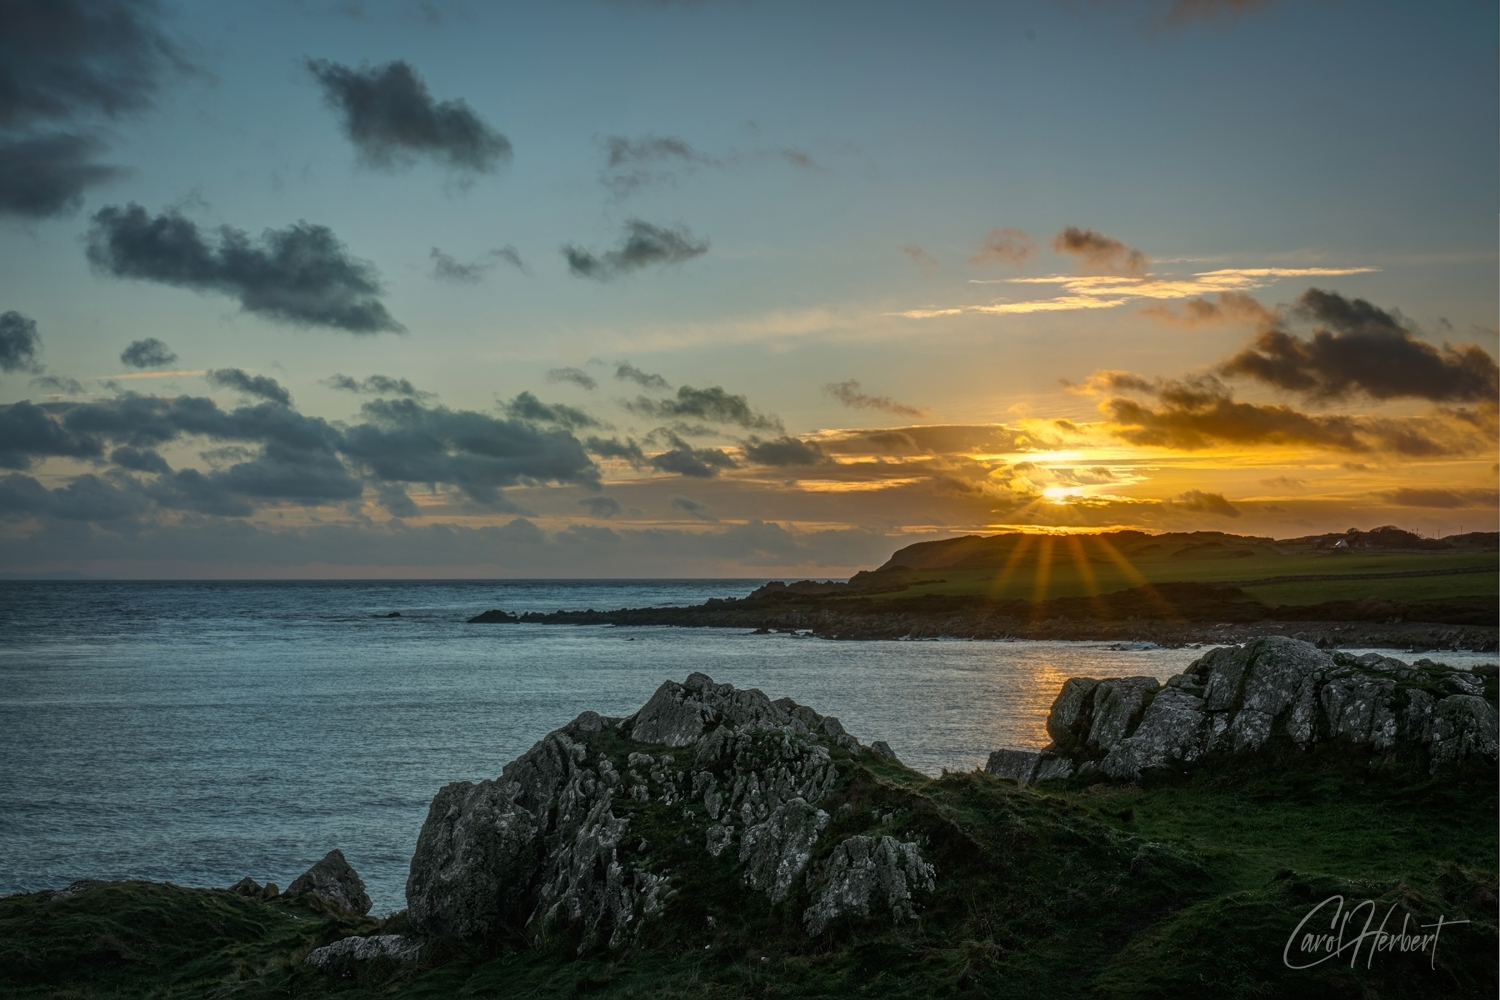 Isle of Whithorn at Sunset